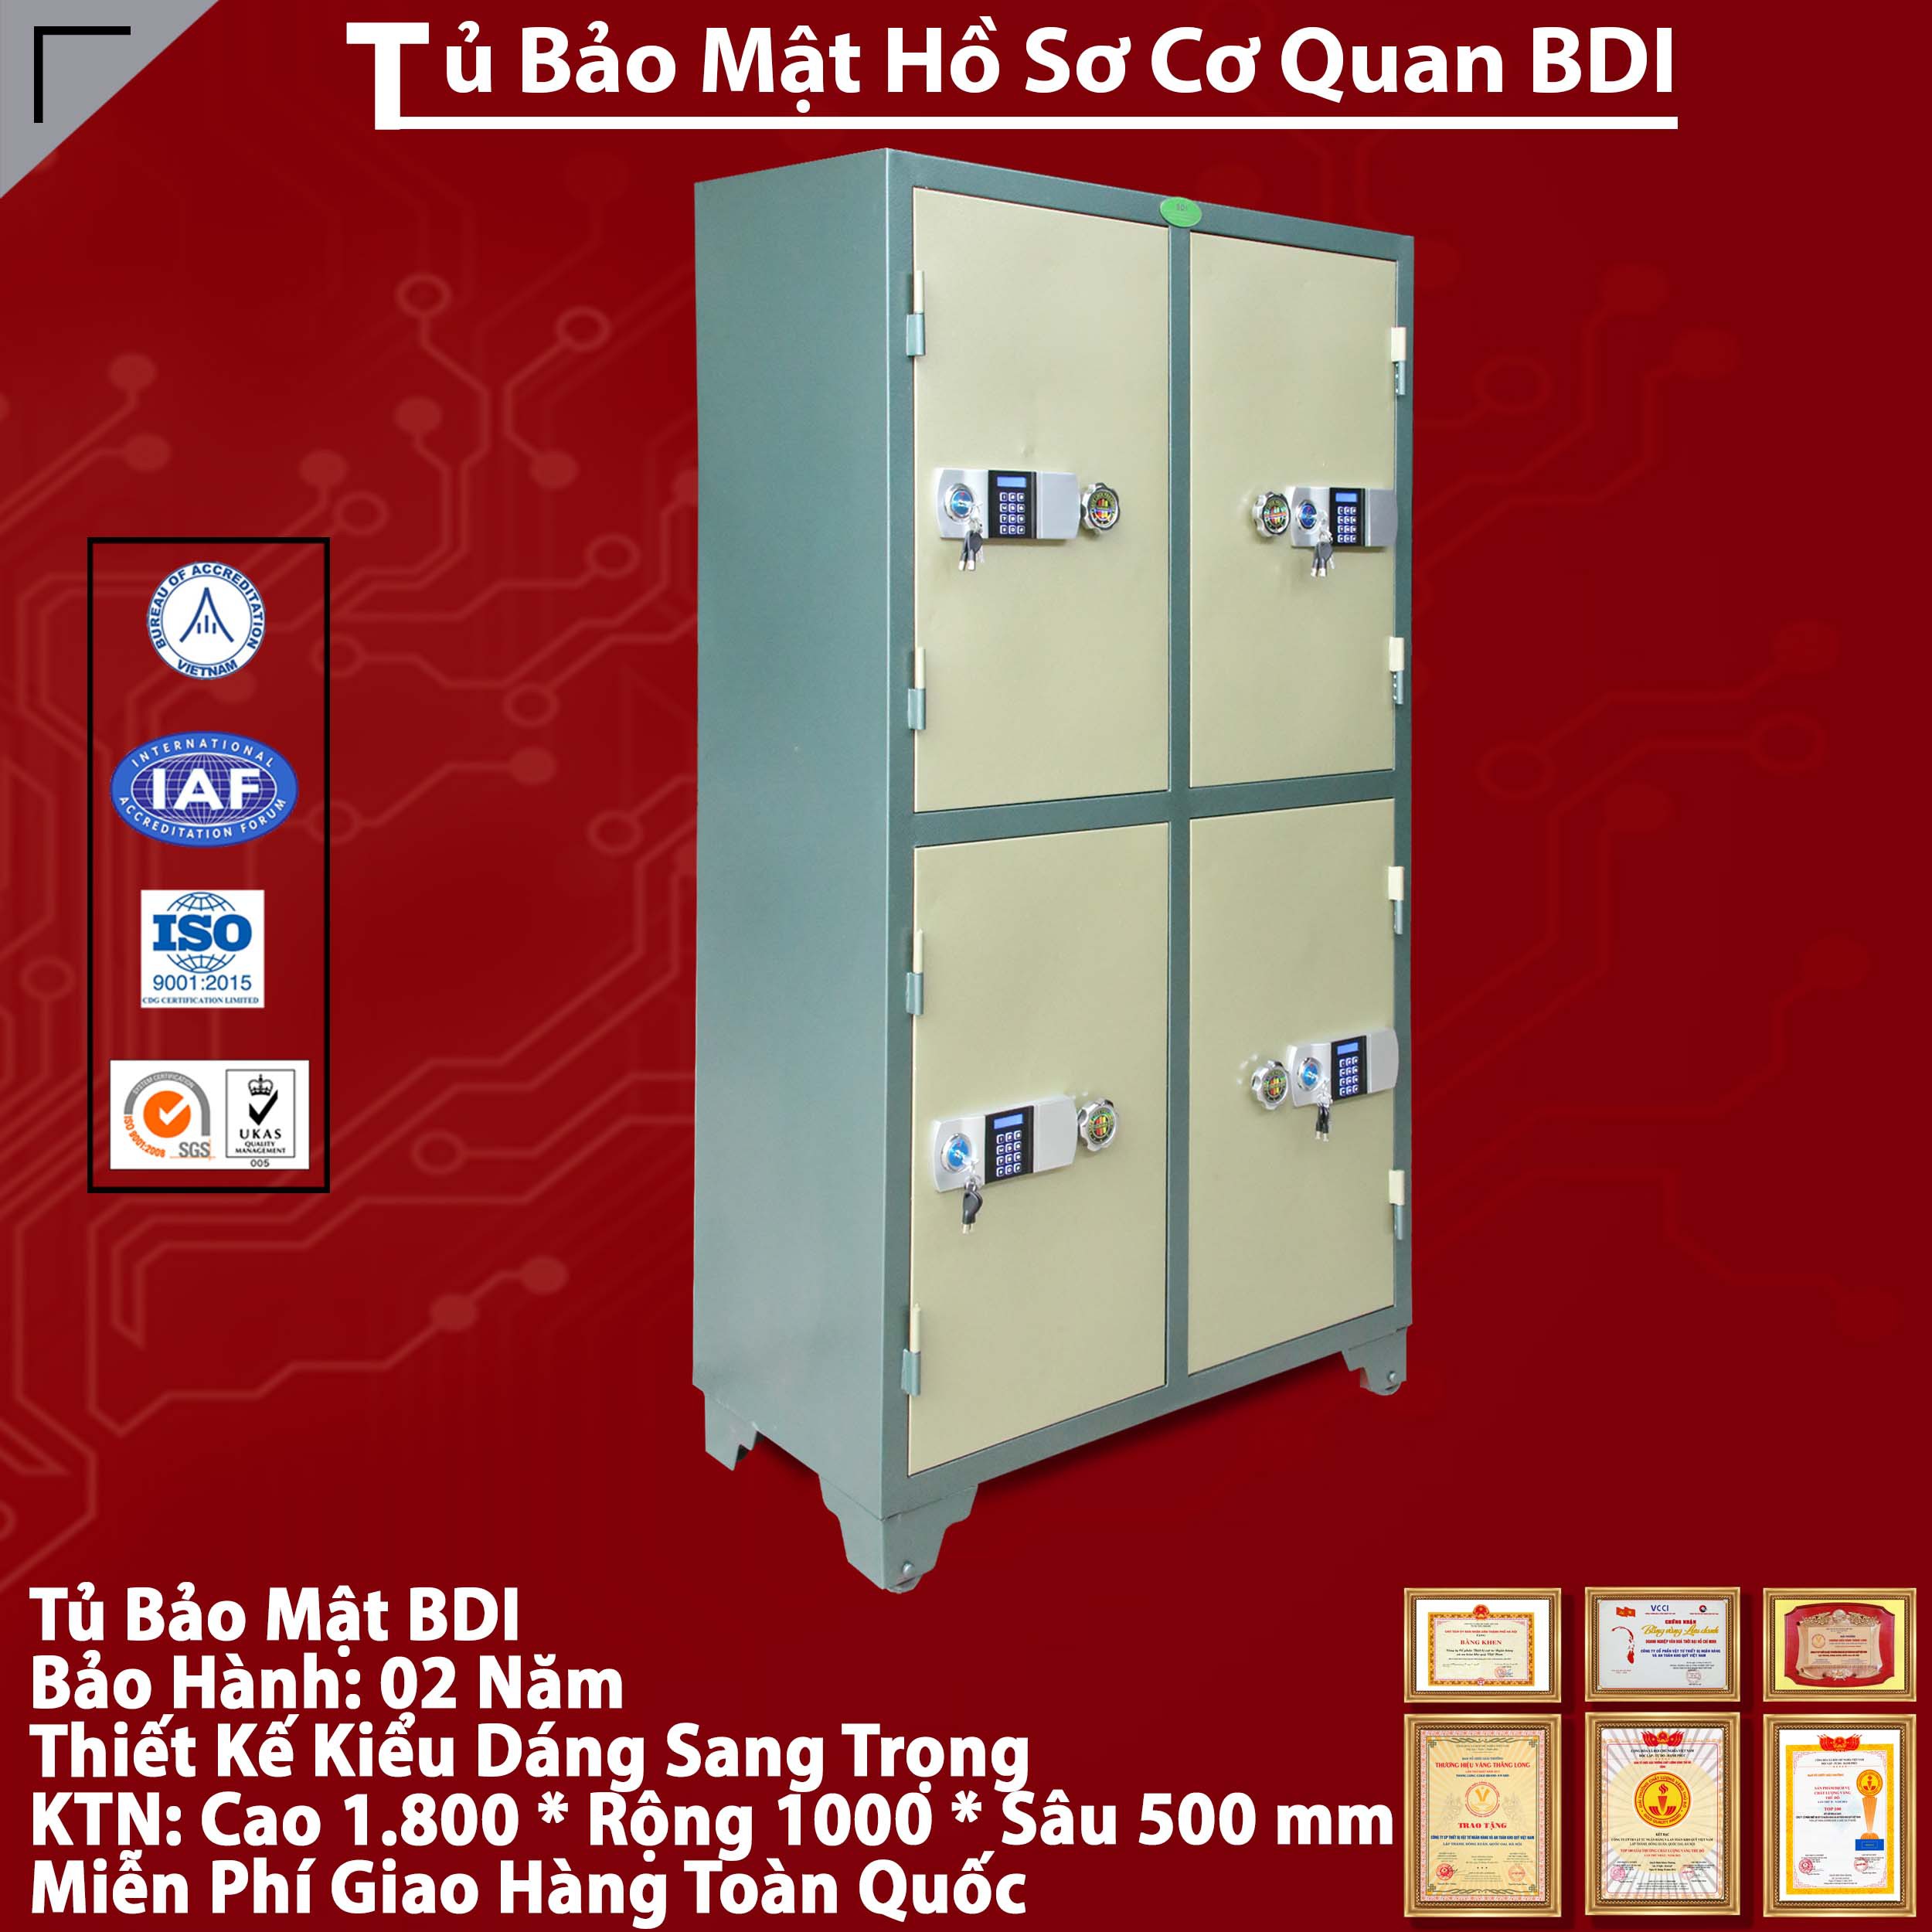 Tu Bao Mat 2 Canh Hien Dai Cao Cap